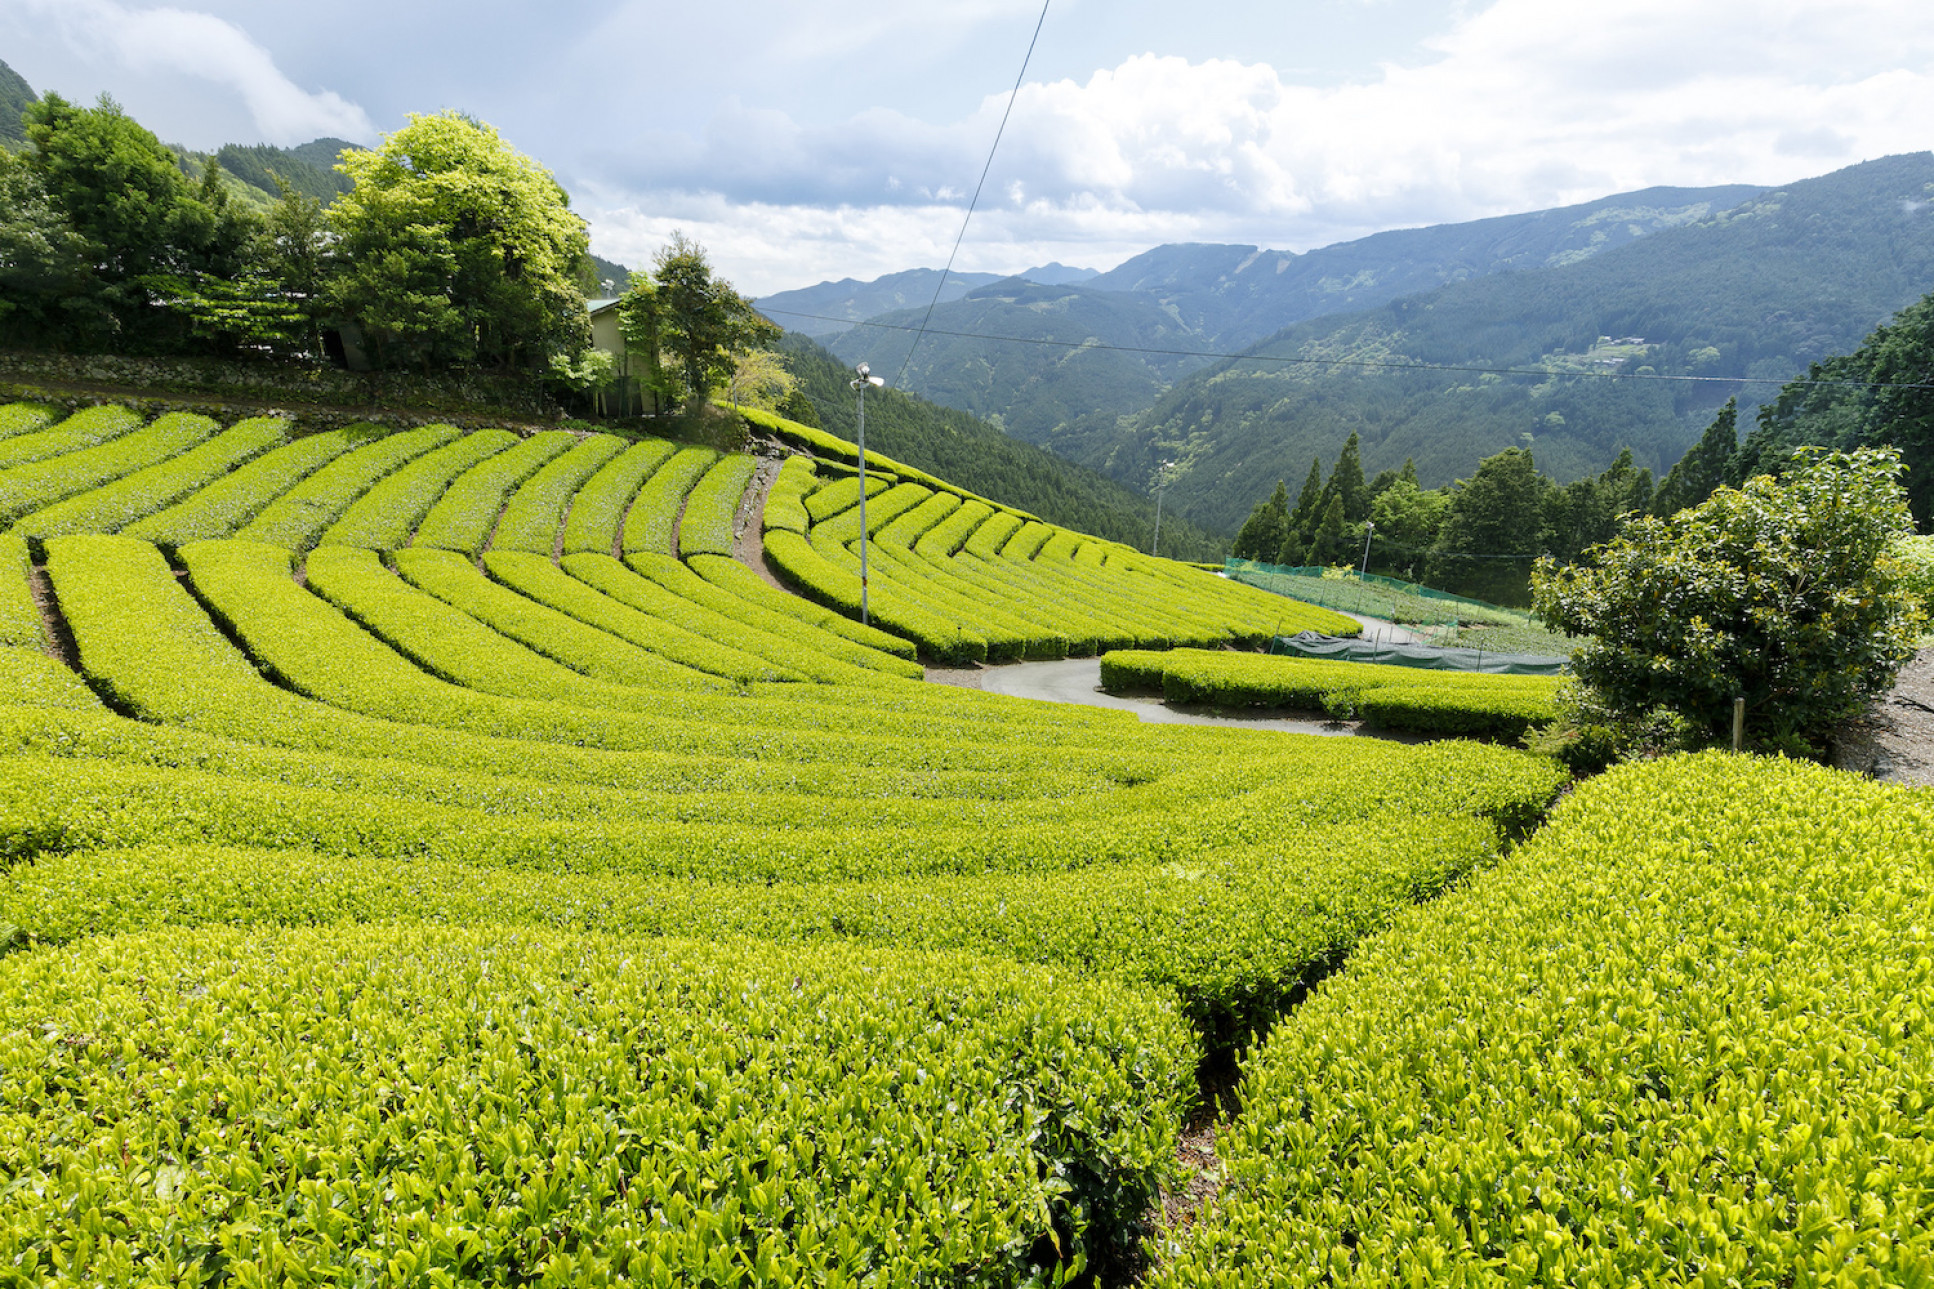 Expansive tea fields under Suruga's skies.